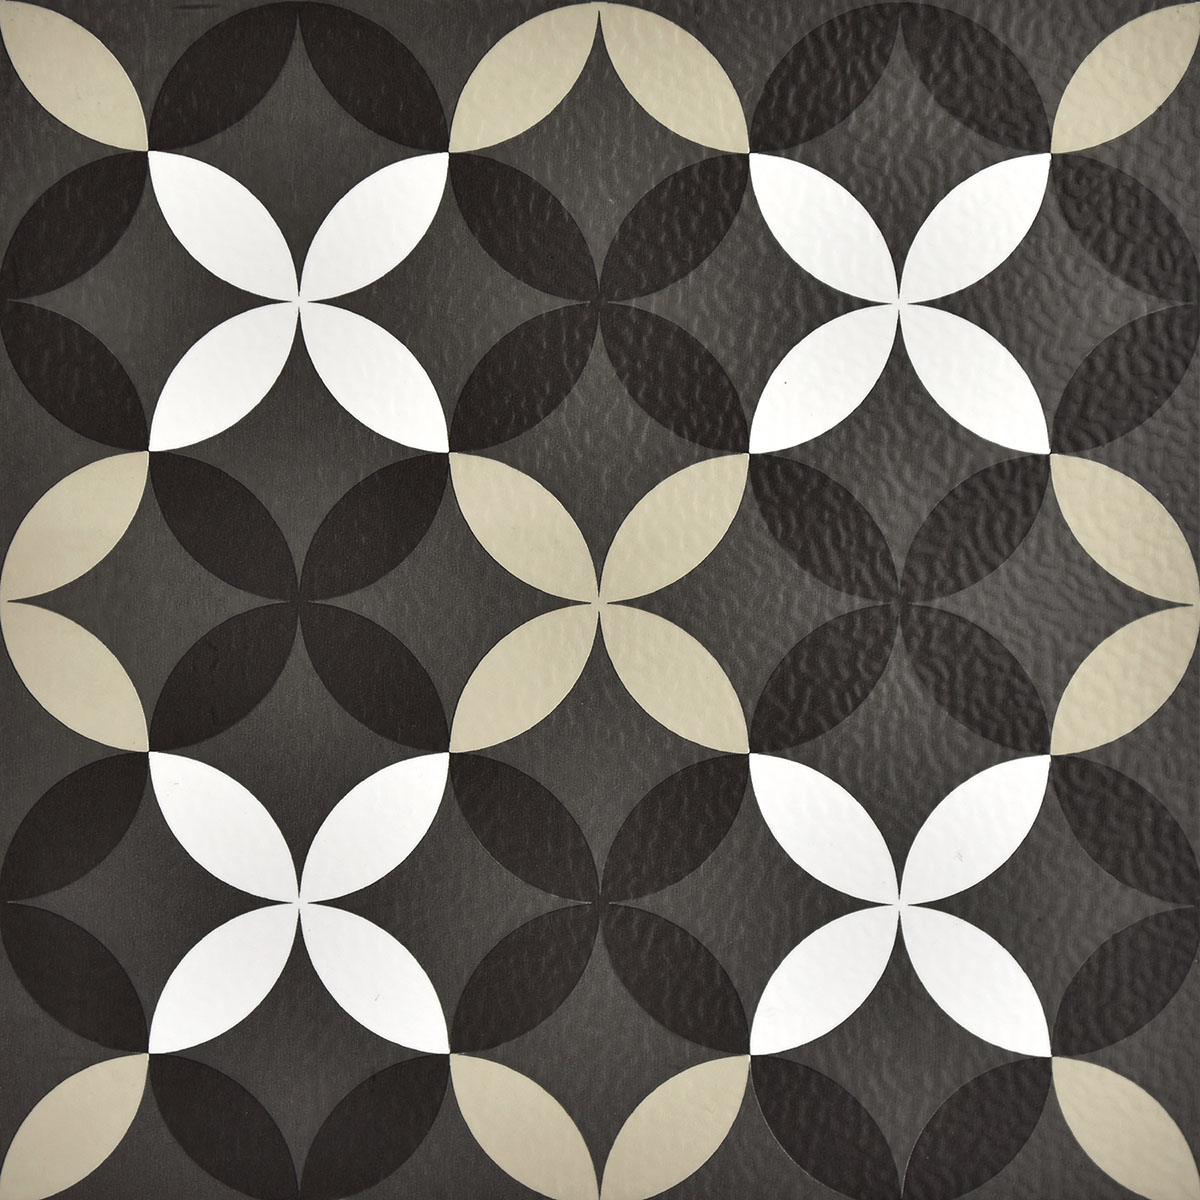 Retro clover geometric peel and stick floor tile